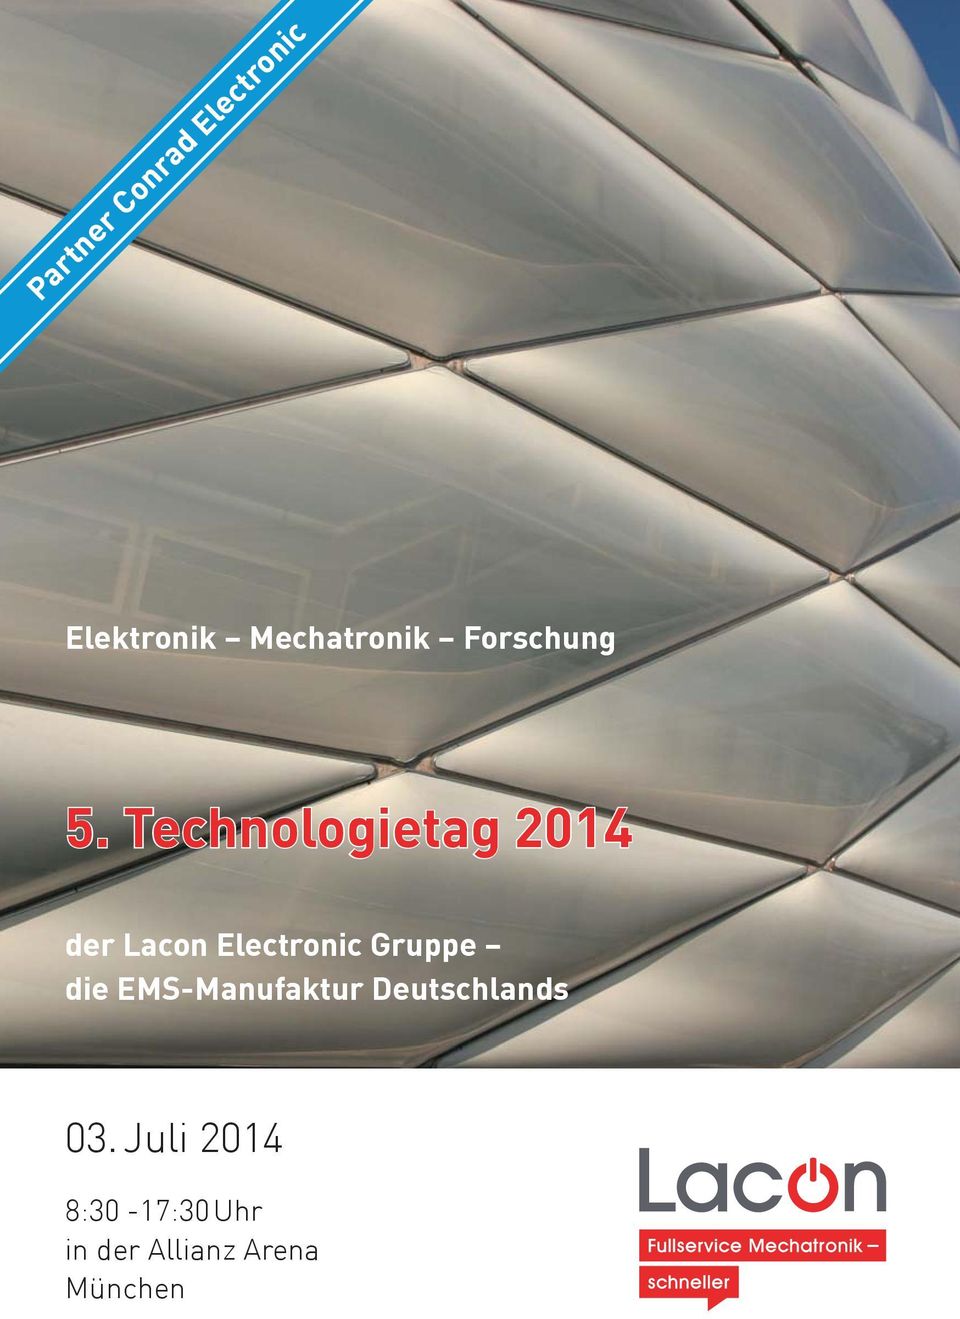 Technologietag 2014 der Lacon Electronic Gruppe